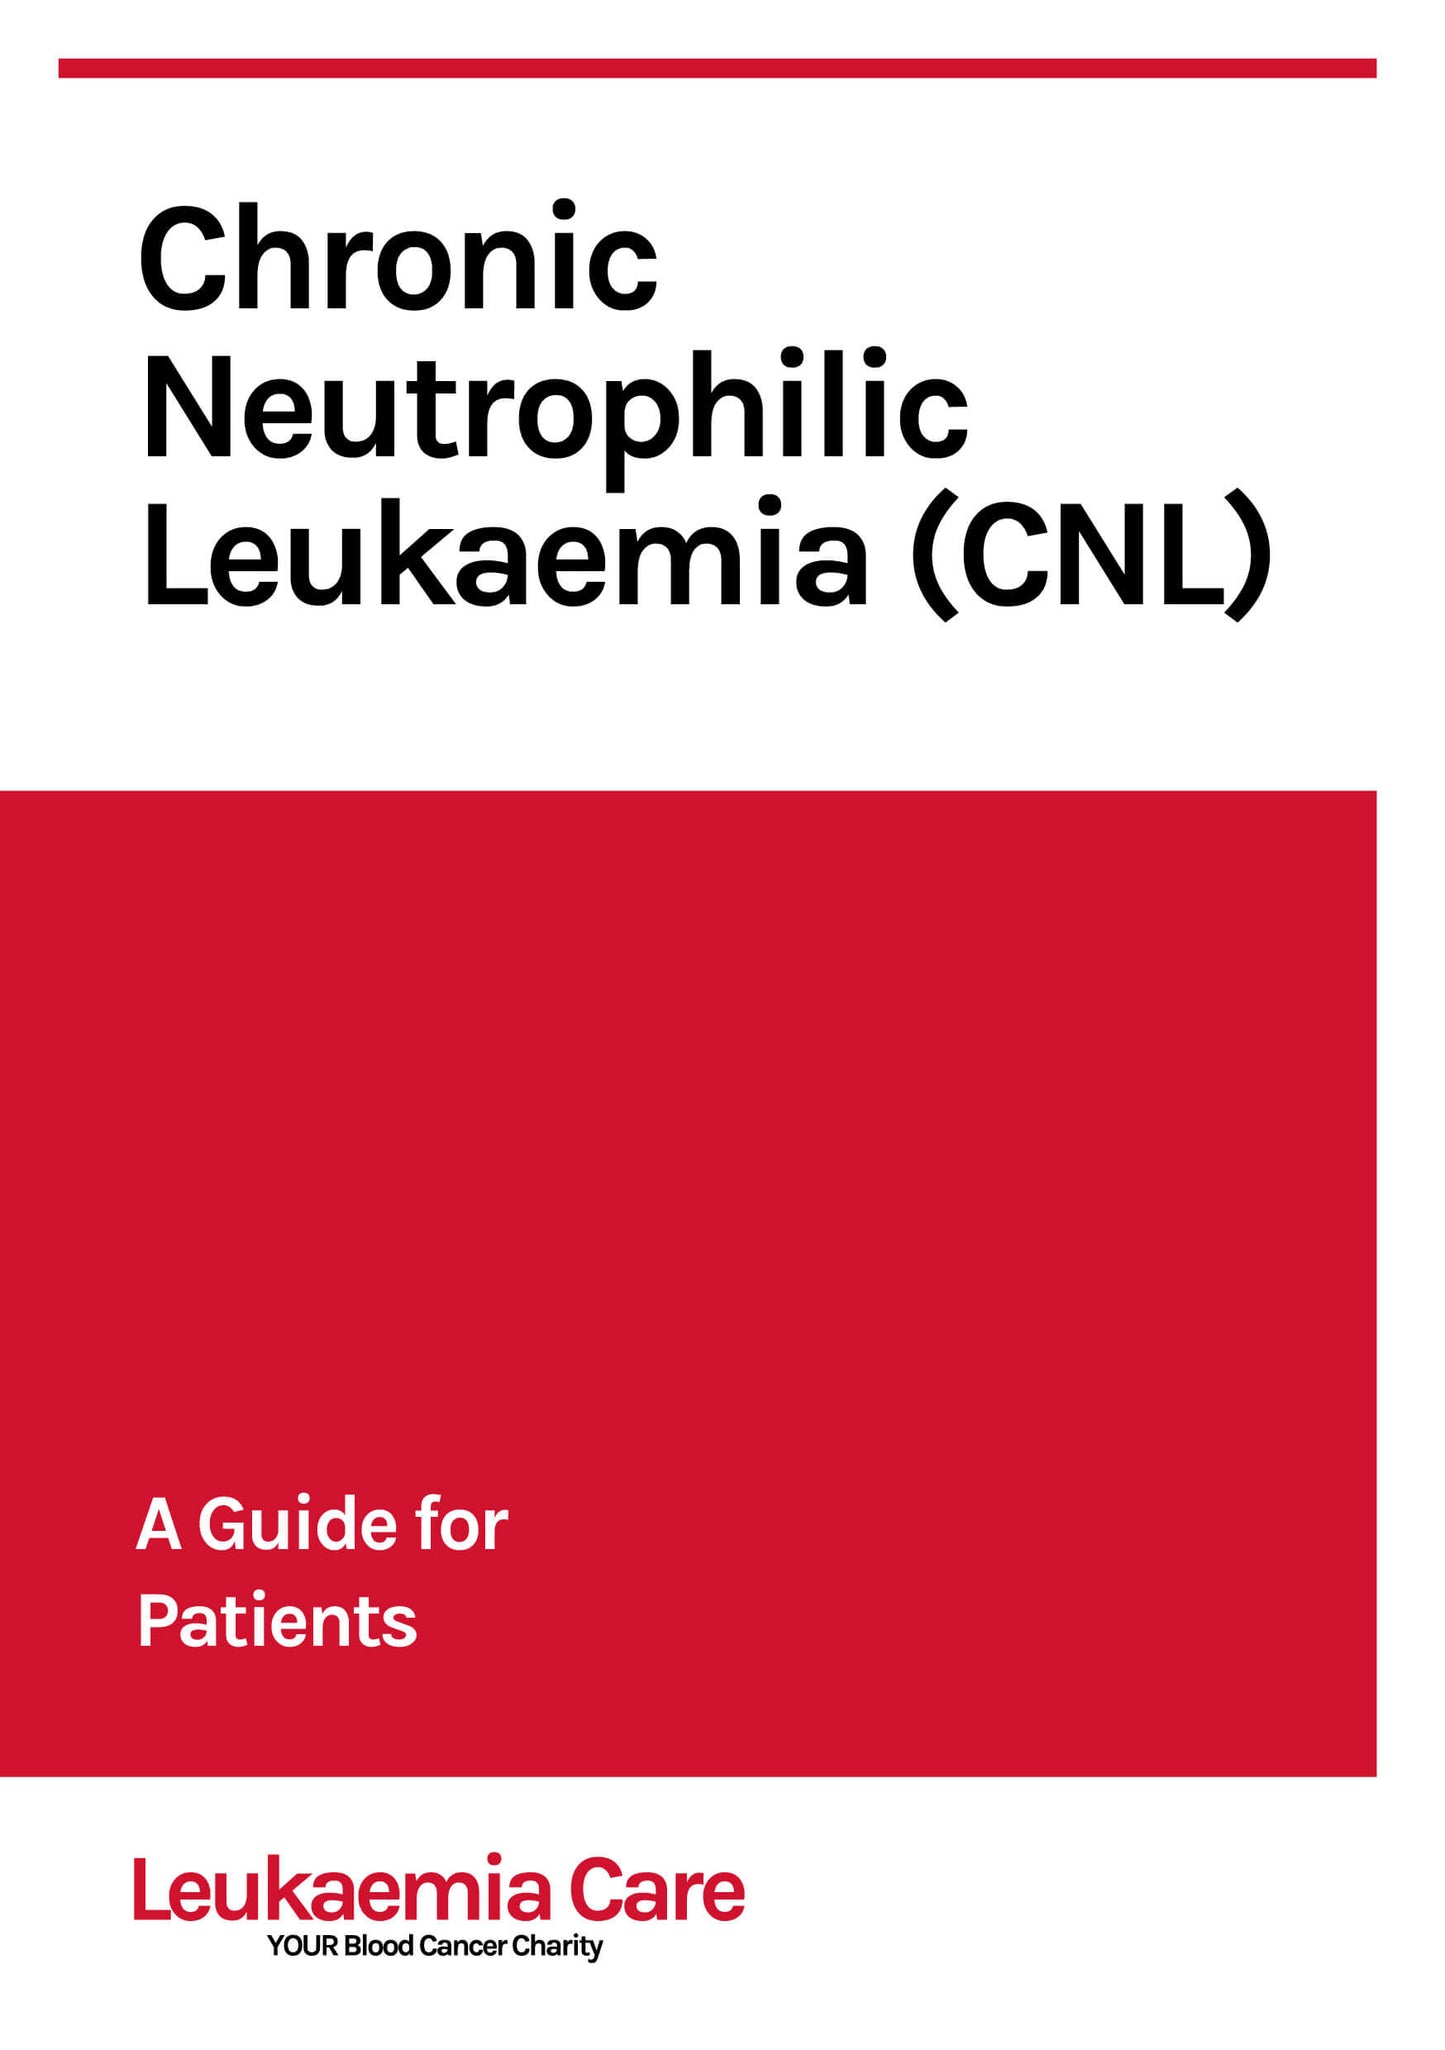 Chronic Neutrophilic Leukaemia (CNL)